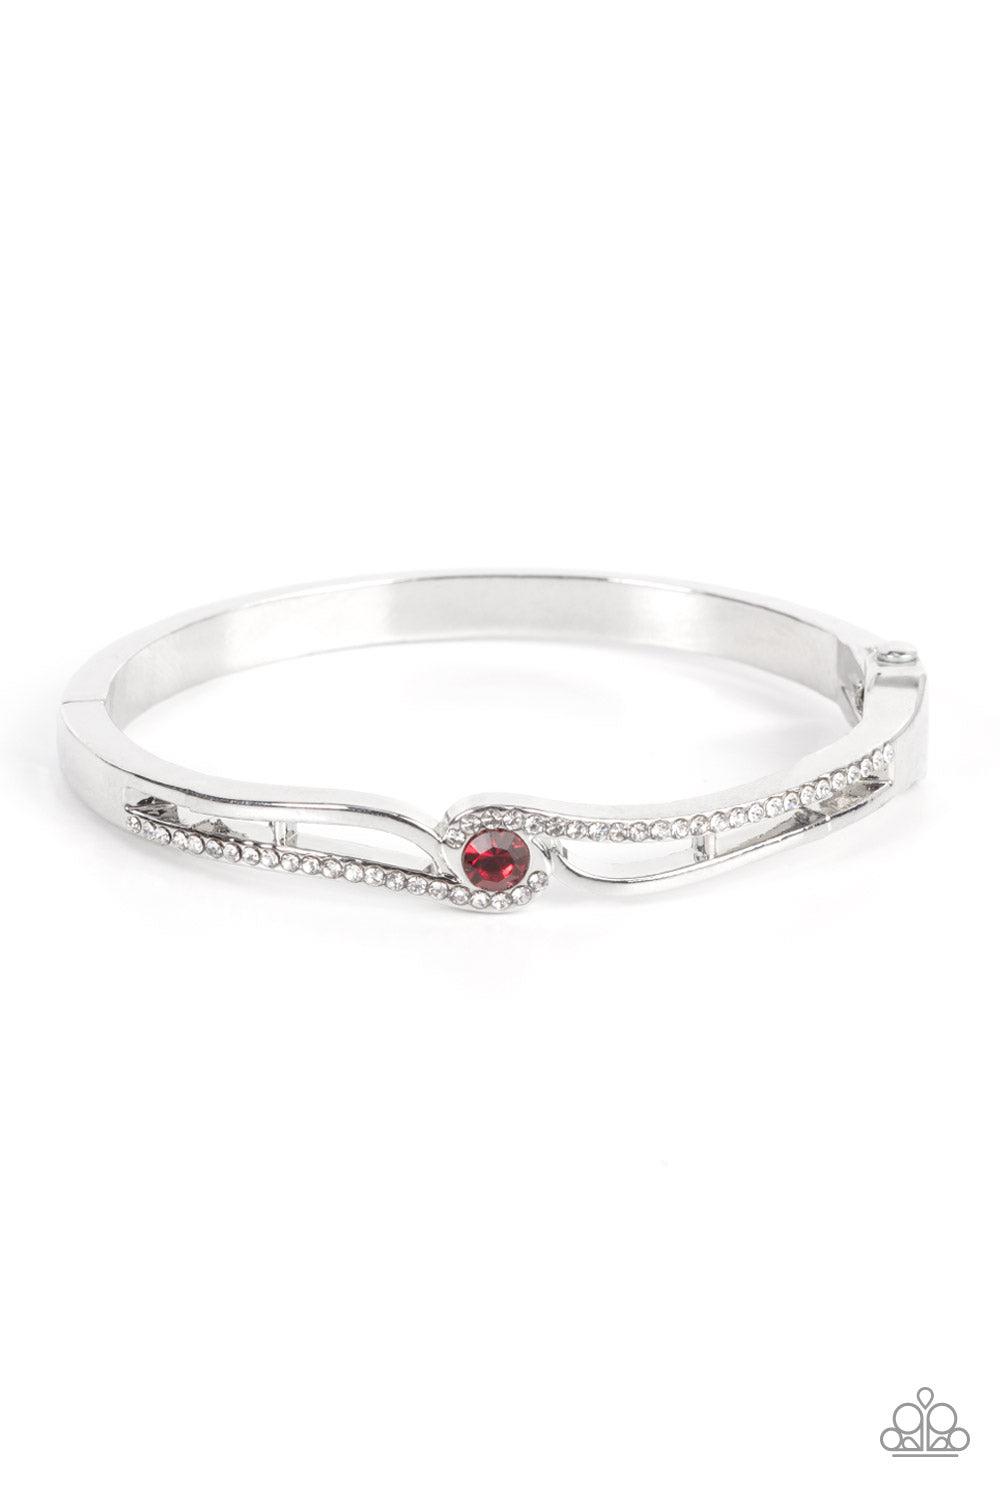 Top-Shelf Shimmer Red Rhinestone Bracelet - Paparazzi Accessories- lightbox - CarasShop.com - $5 Jewelry by Cara Jewels